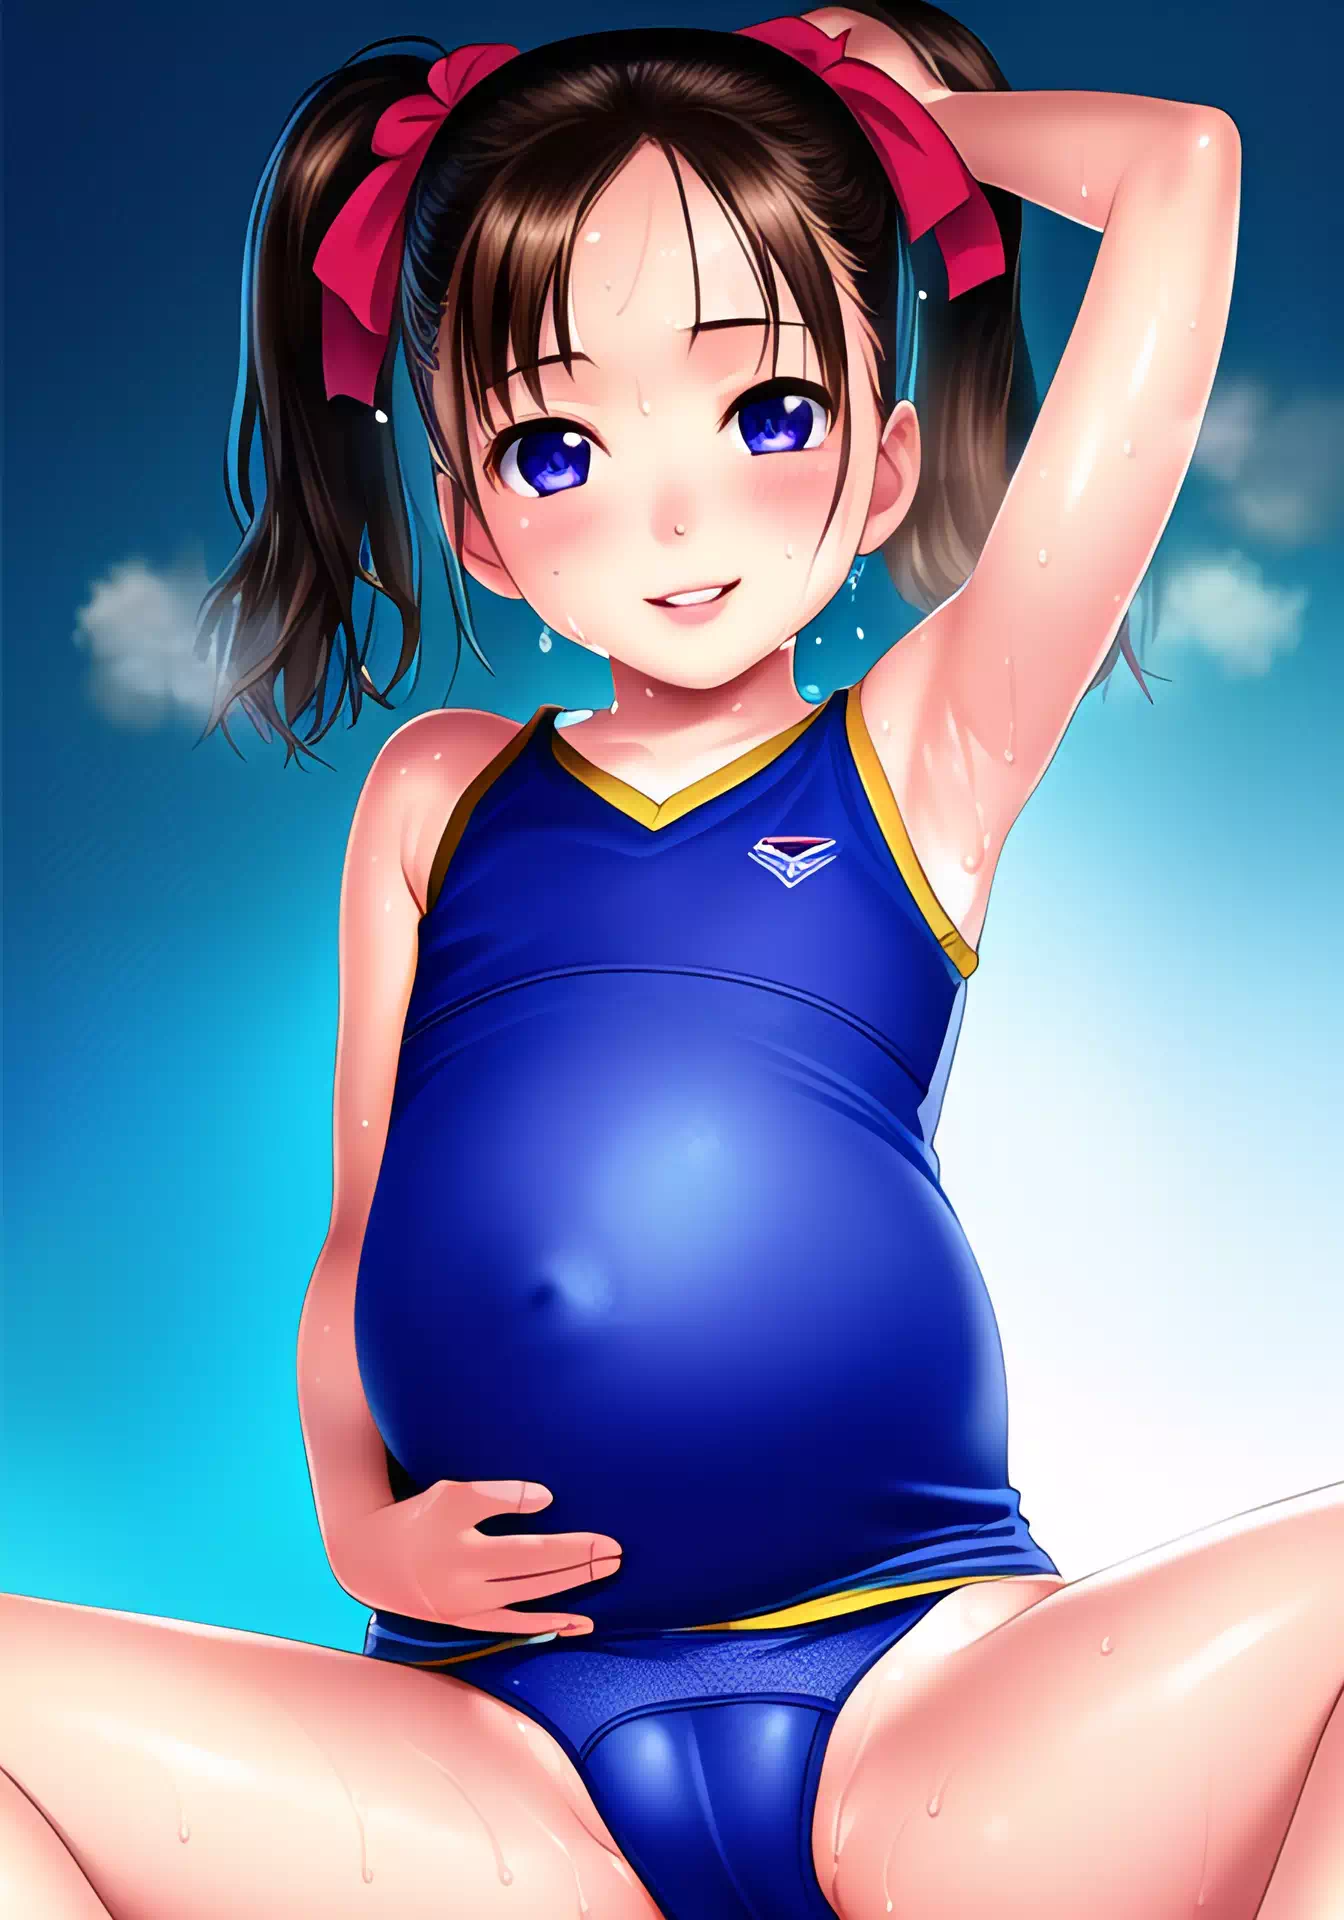 Cute pregnant loli cheerleader